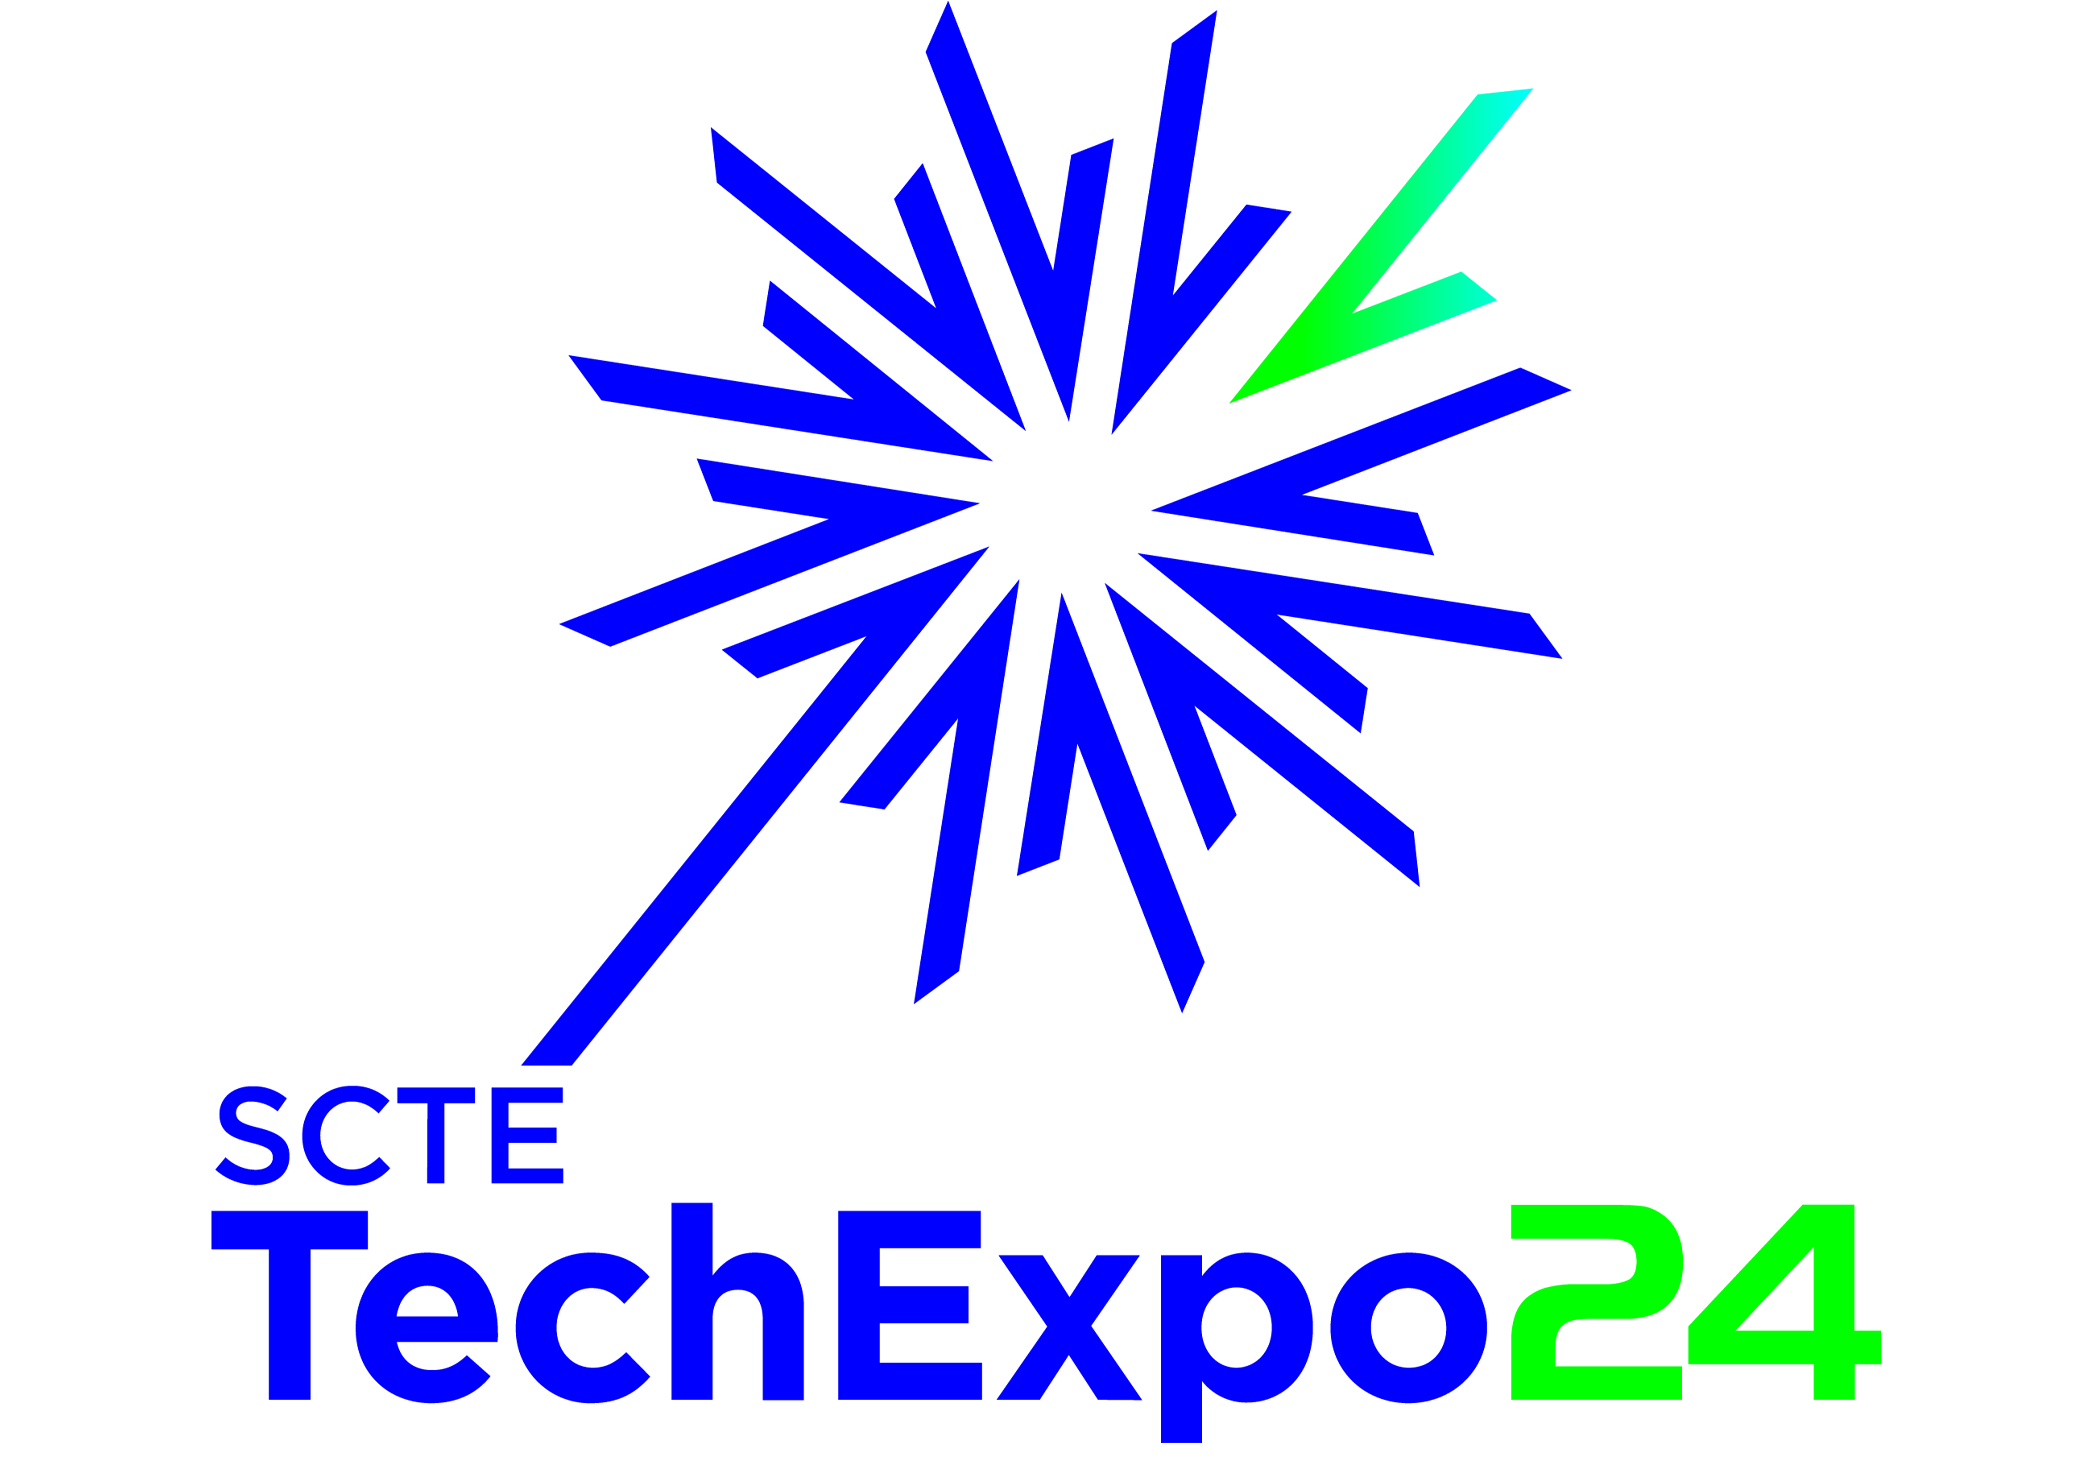 techexpo24-stack-logo-main-color.png